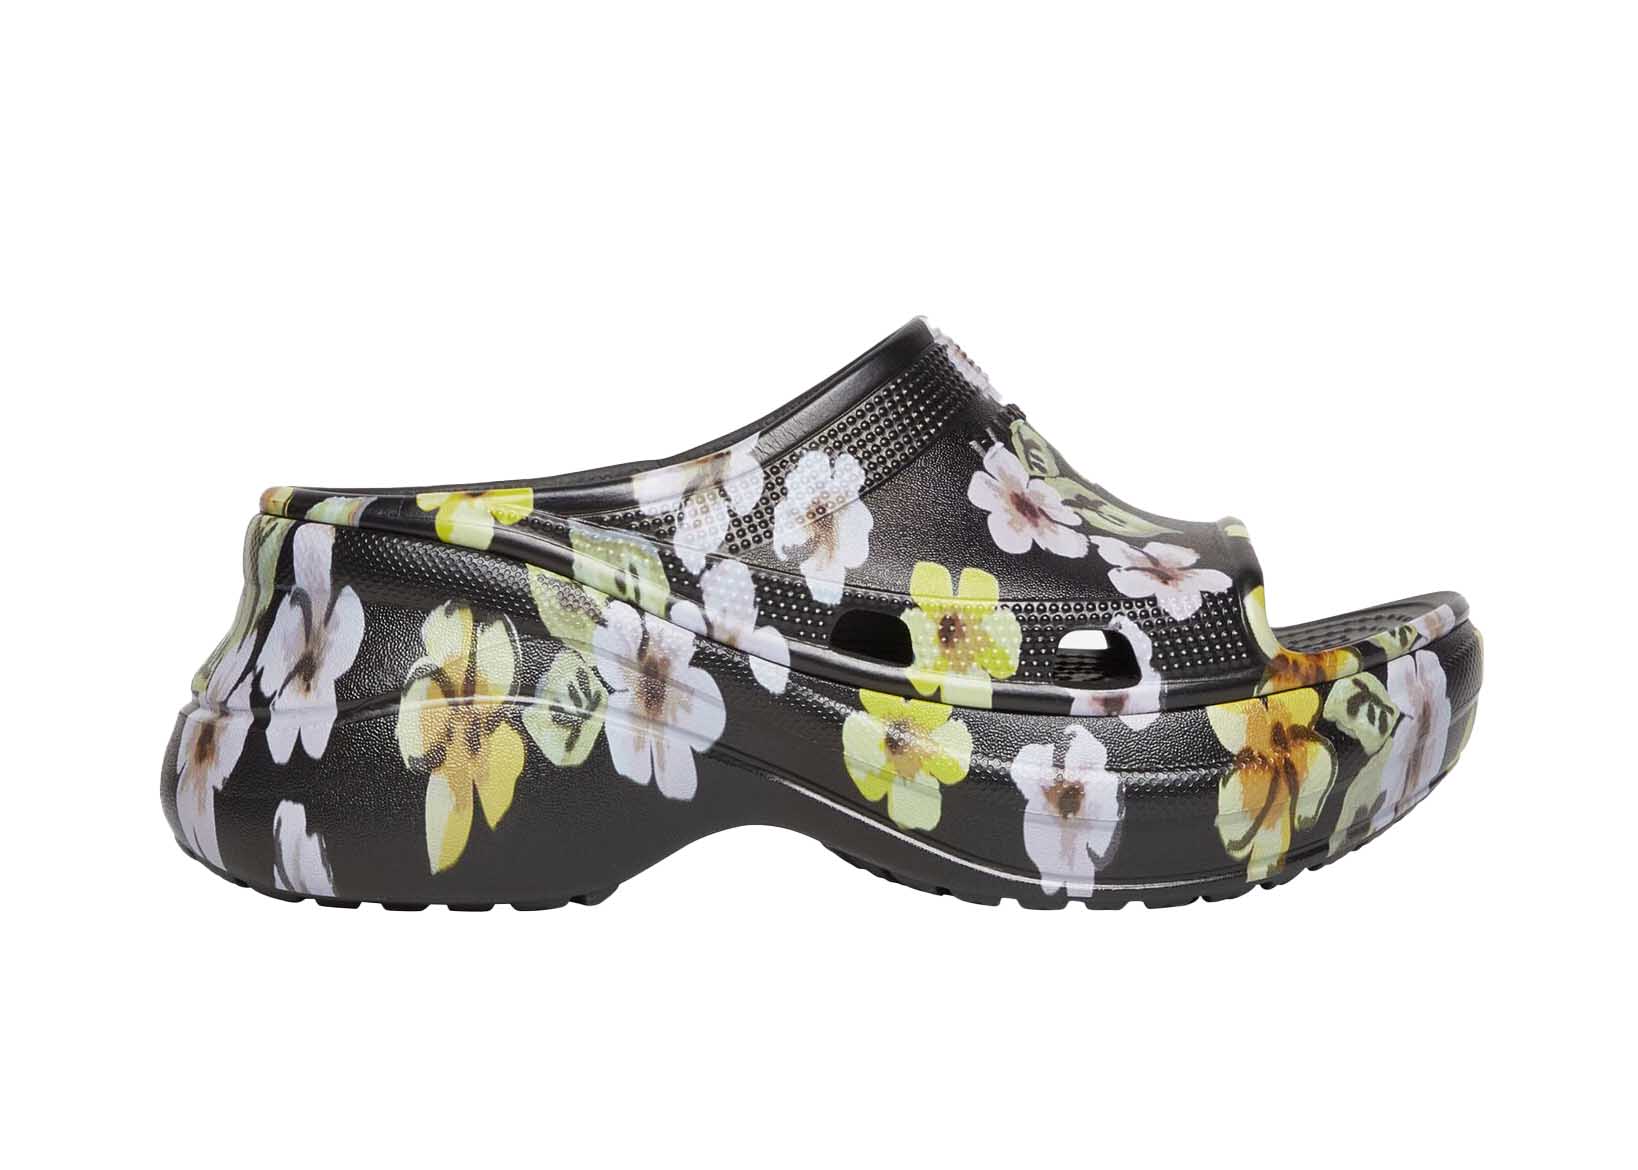 Balenciaga x Crocs Pool Slide Sandals Grey Flower (Women's)